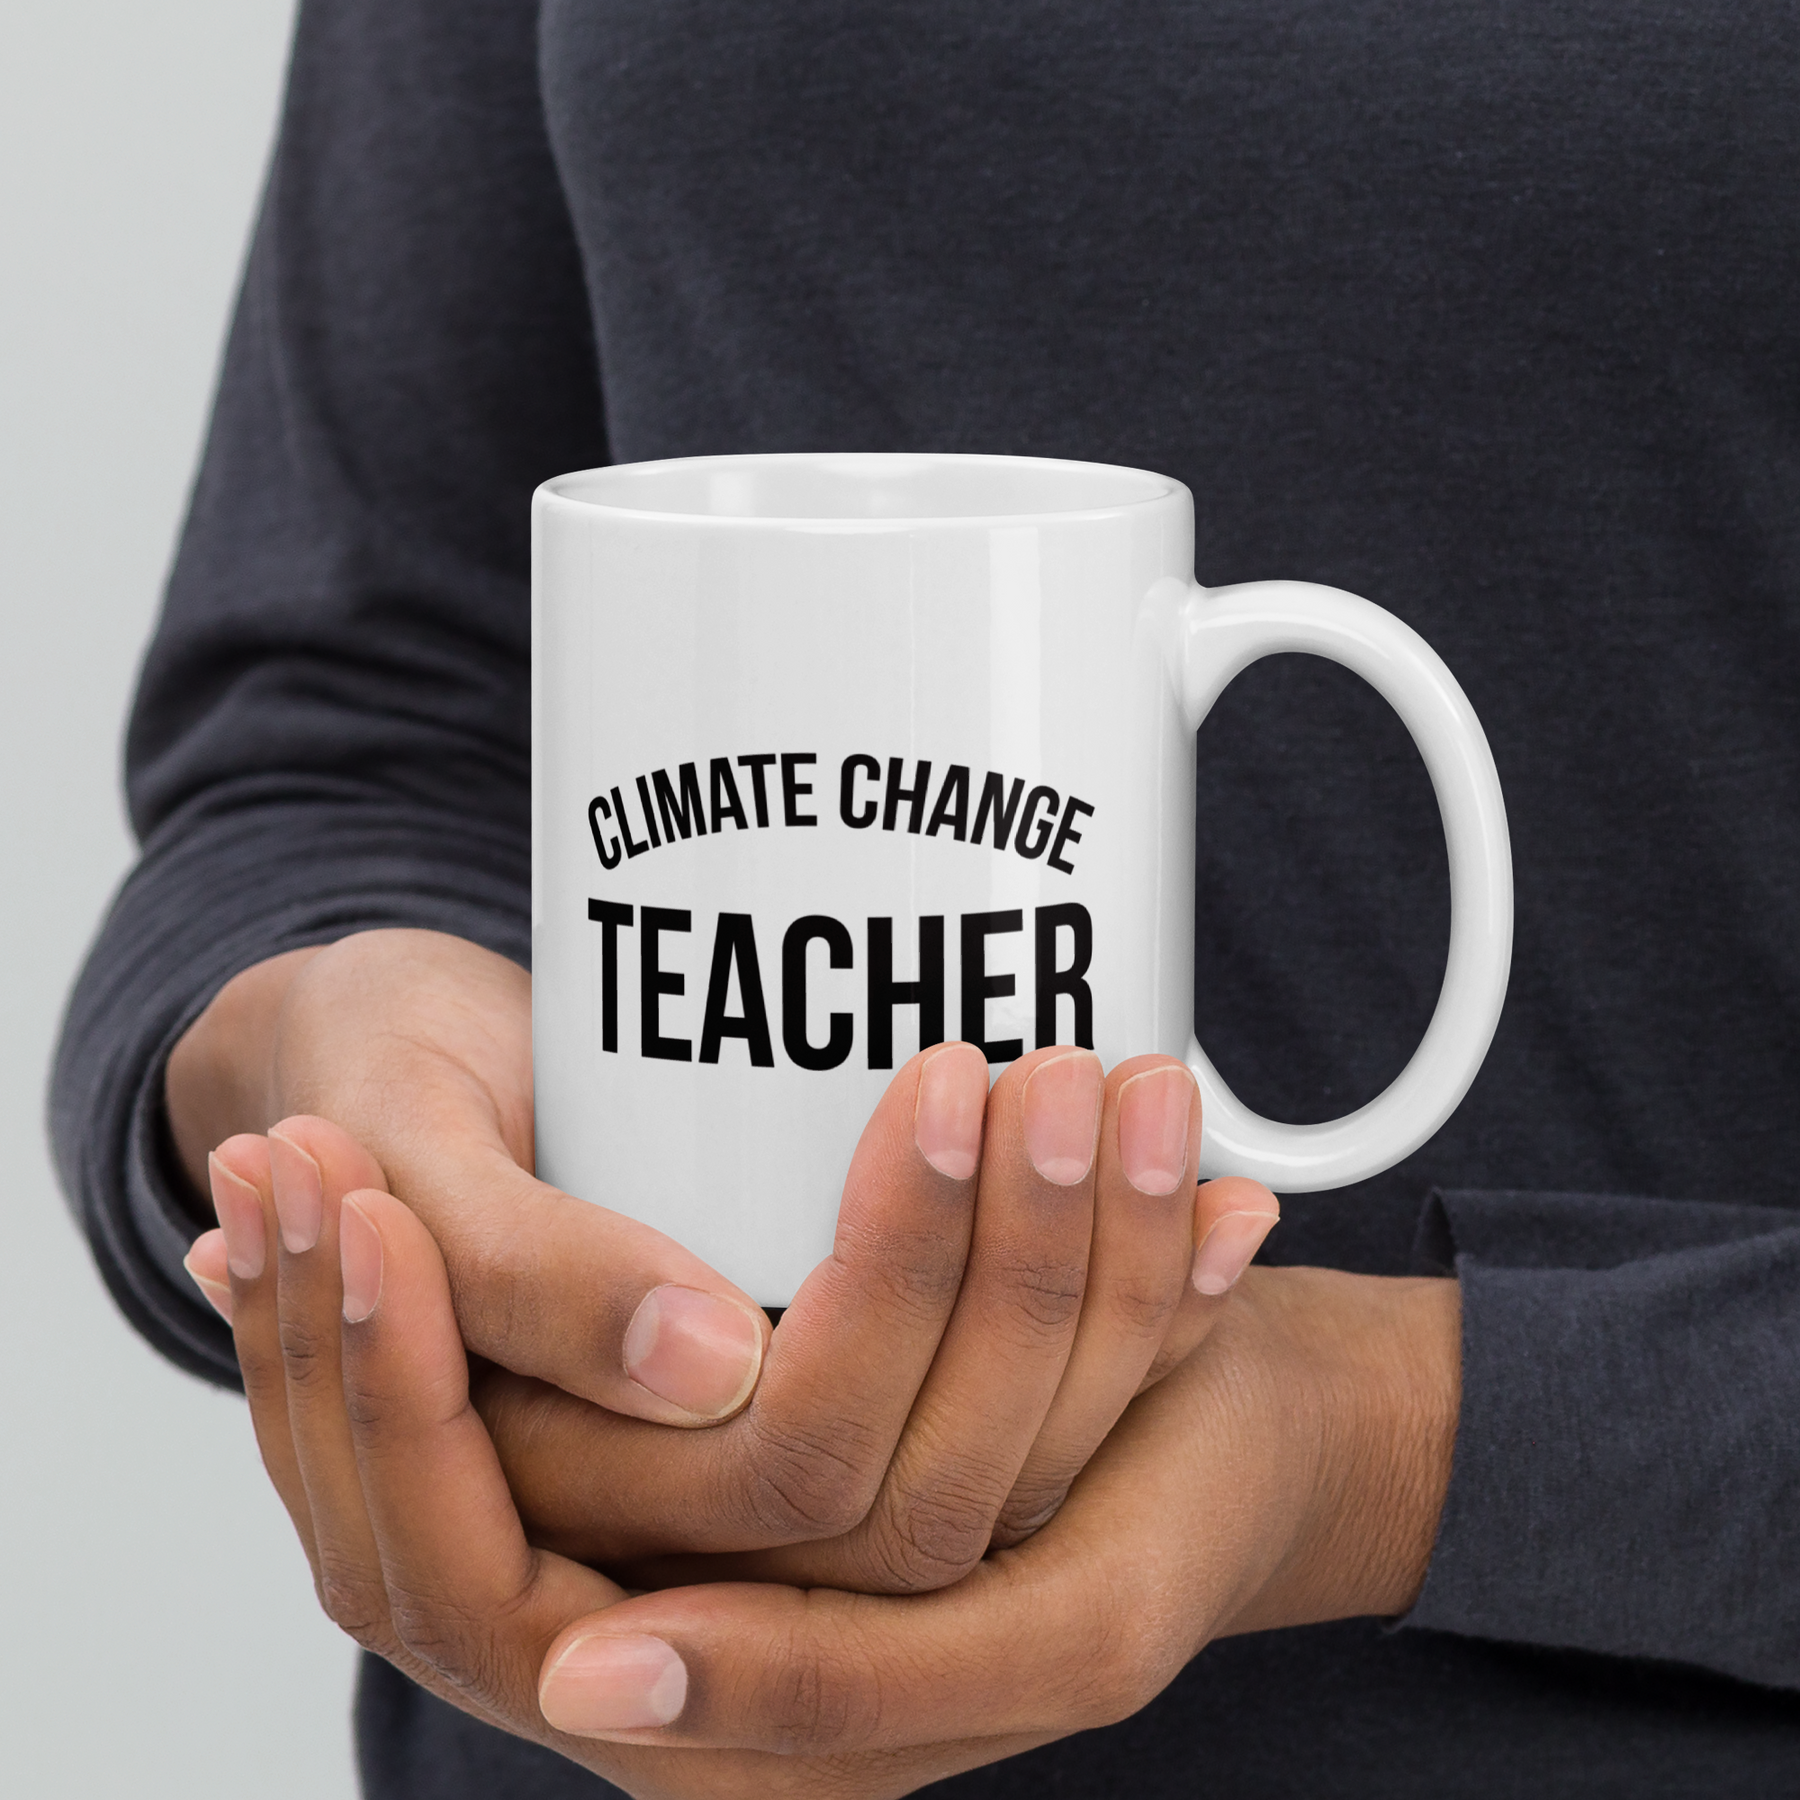 CLIMATE CHANGE TEACHER White glossy mug